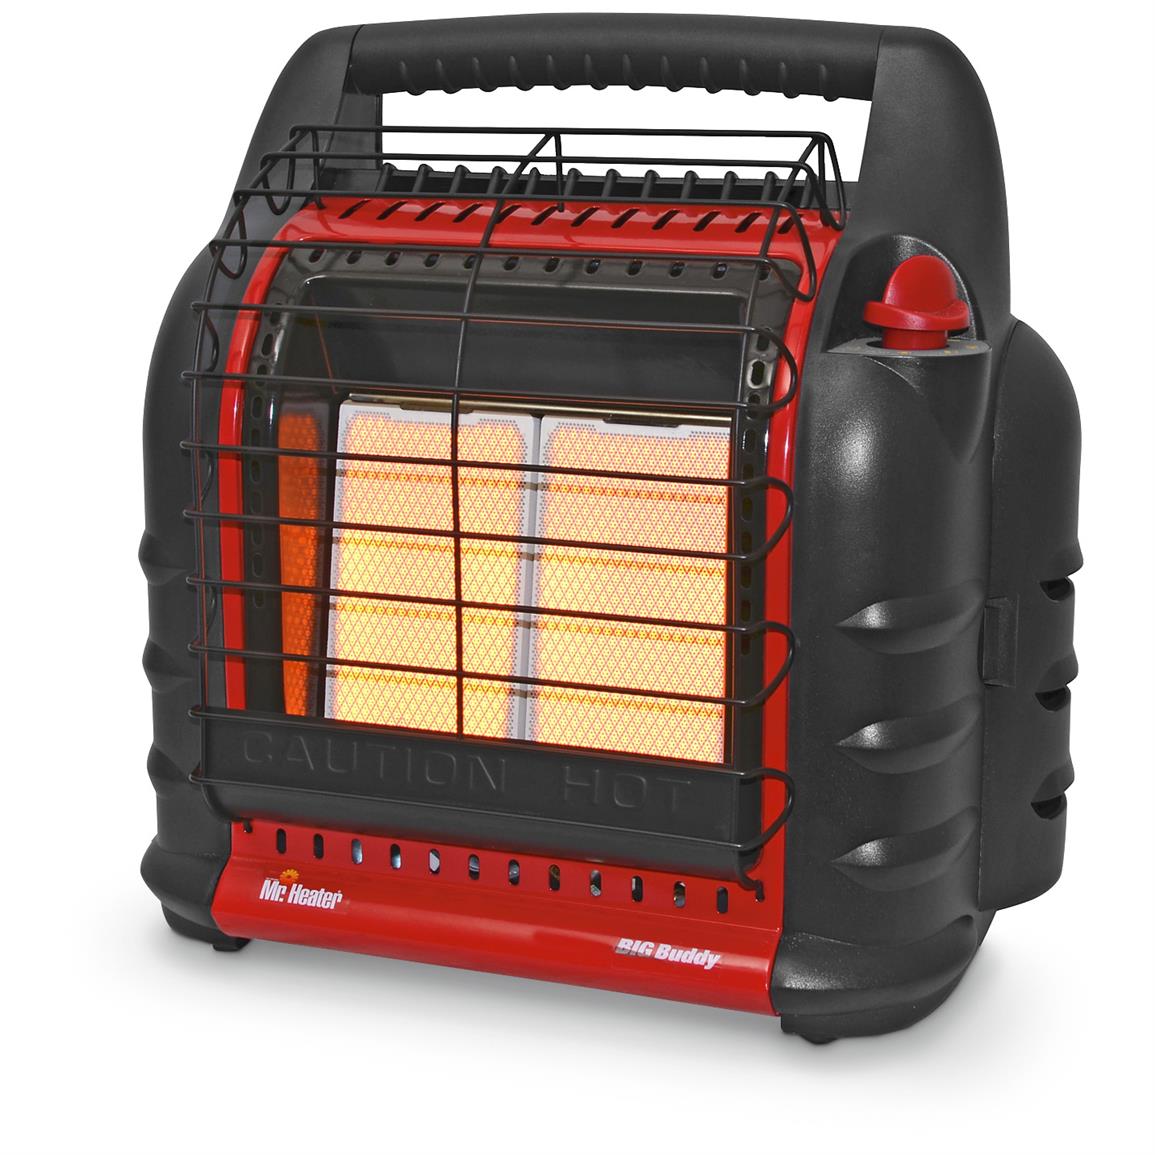 Mr Heater Big Buddy Portable Propane Heater, 18,000 BTU